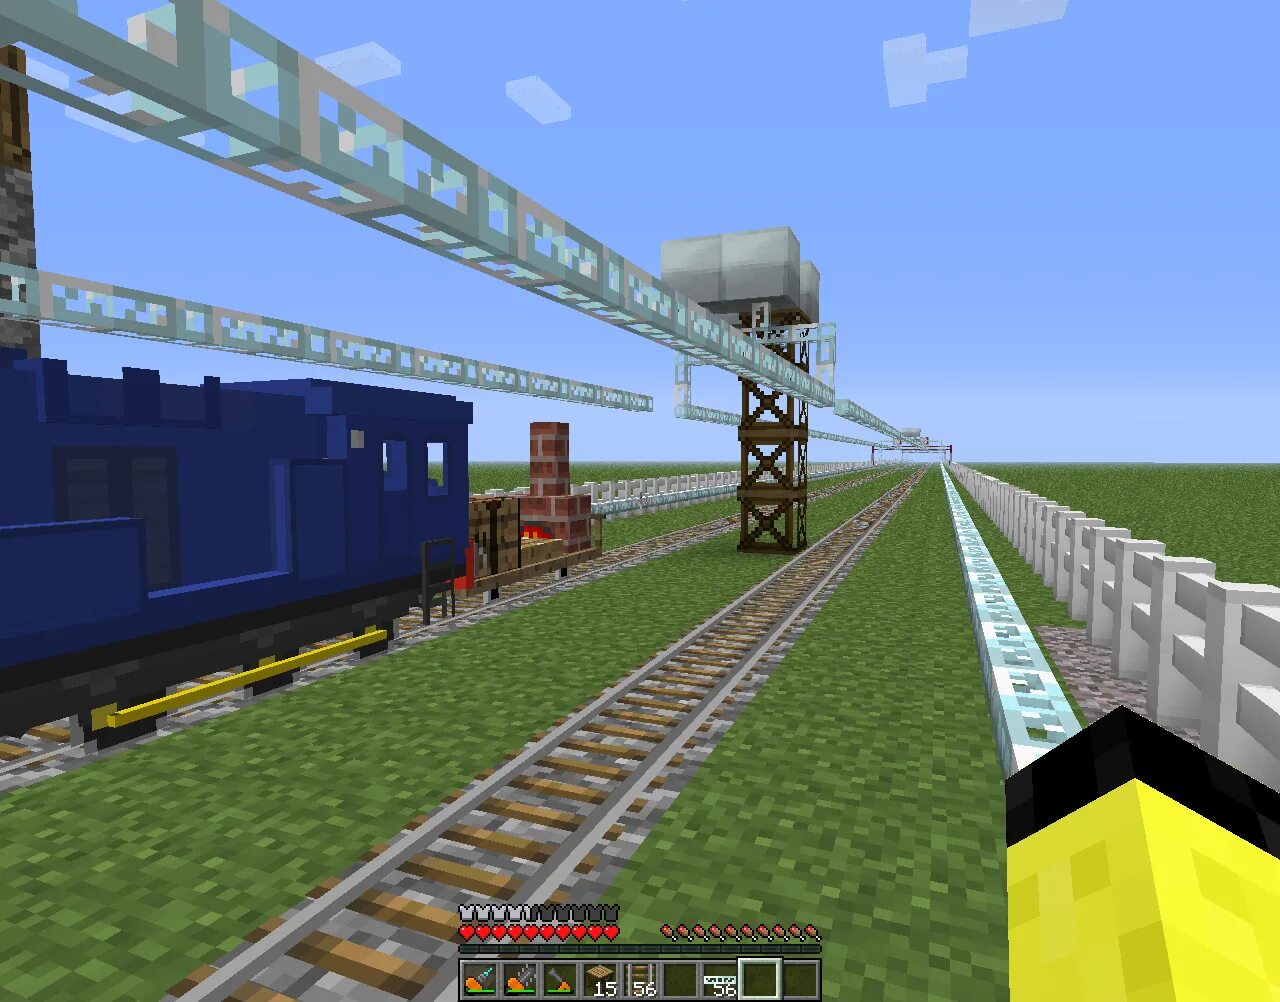 Traincraft 1.12.2. Real Train Mod 1.7.10 РЖД. Train Craft Mod 1.12.2. Immersive railroading контактная сеть. Игра майнкрафт поезда